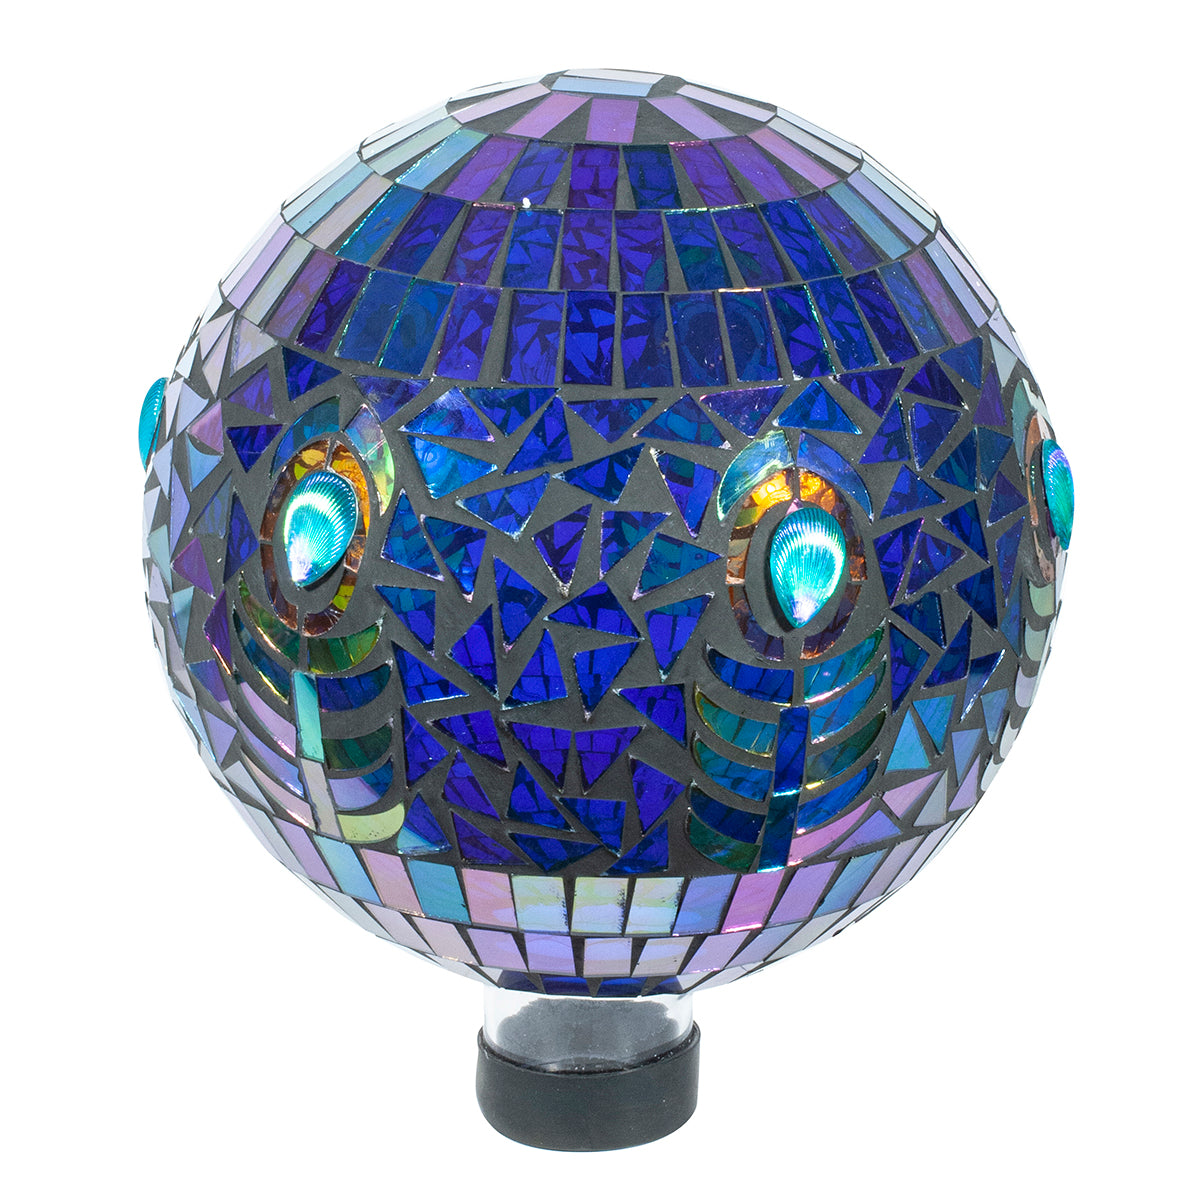 10" Translucent Peacock Mosaic Globe